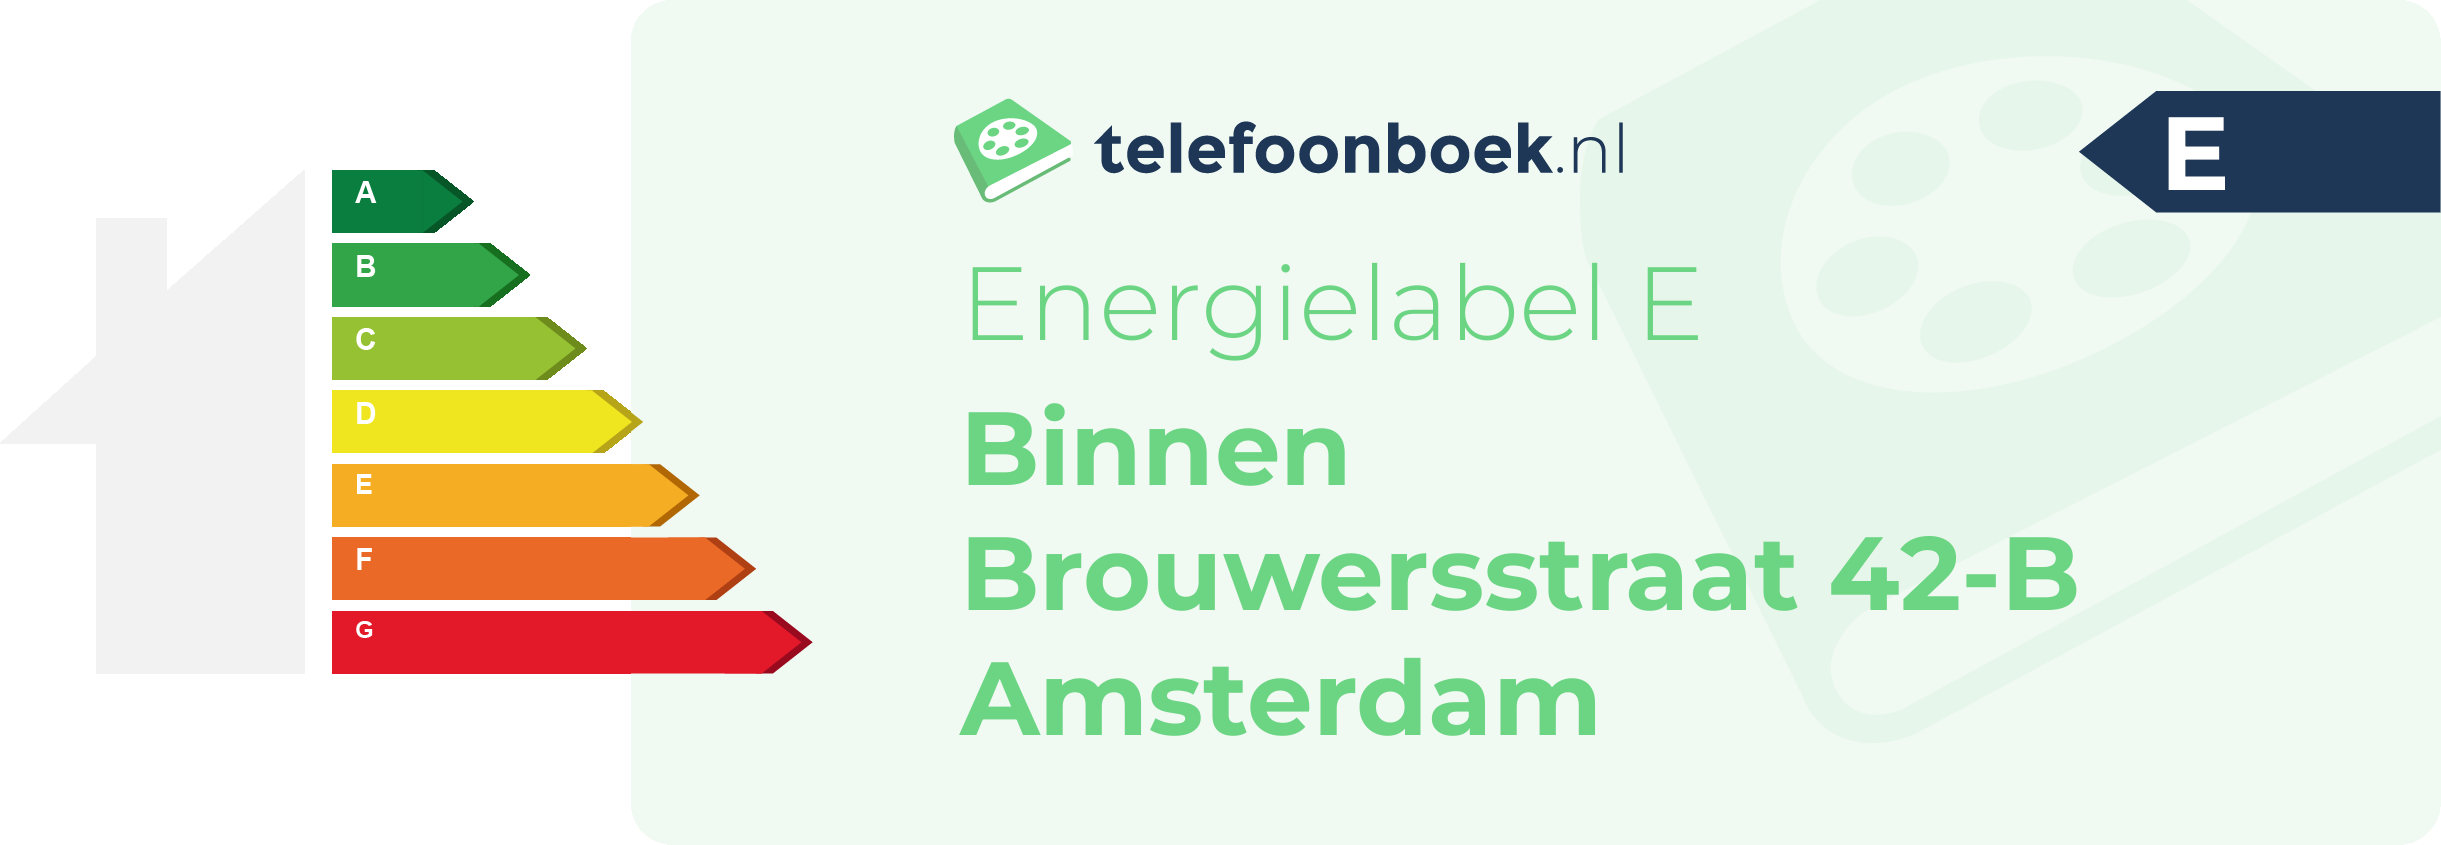 Energielabel Binnen Brouwersstraat 42-B Amsterdam